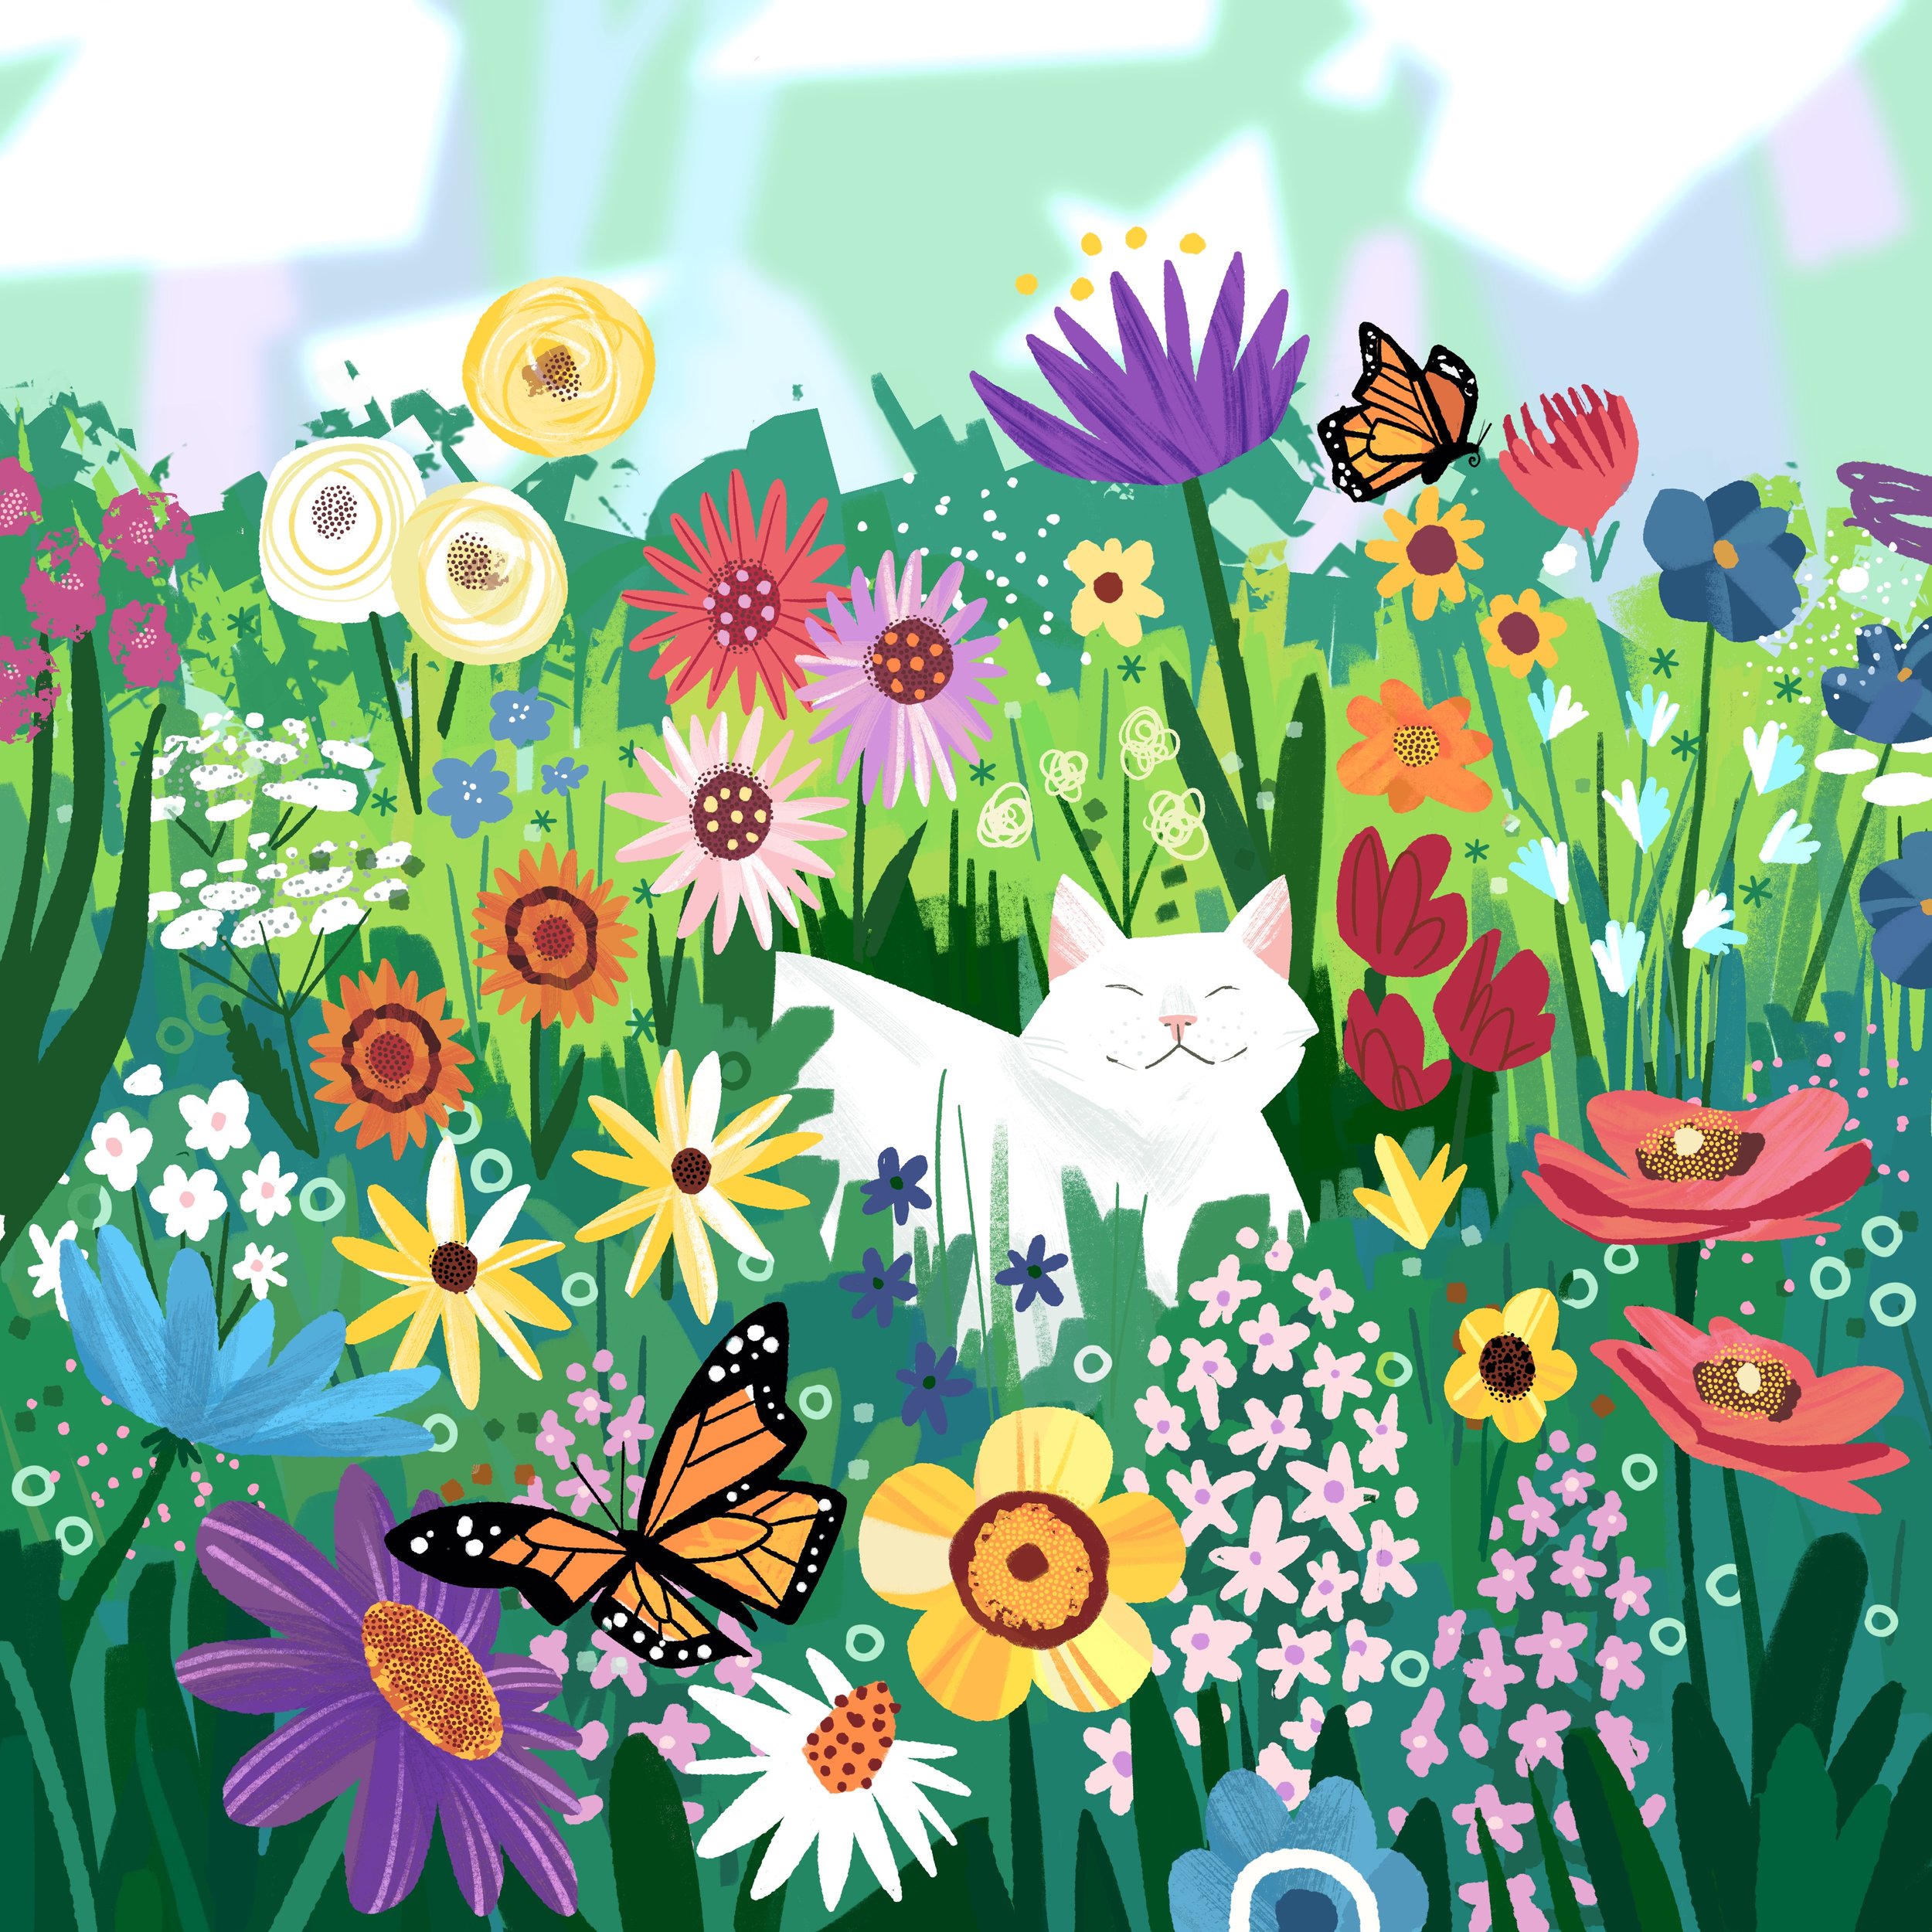 Drew Bardana - Cat in Wildflowers Nature Illustration